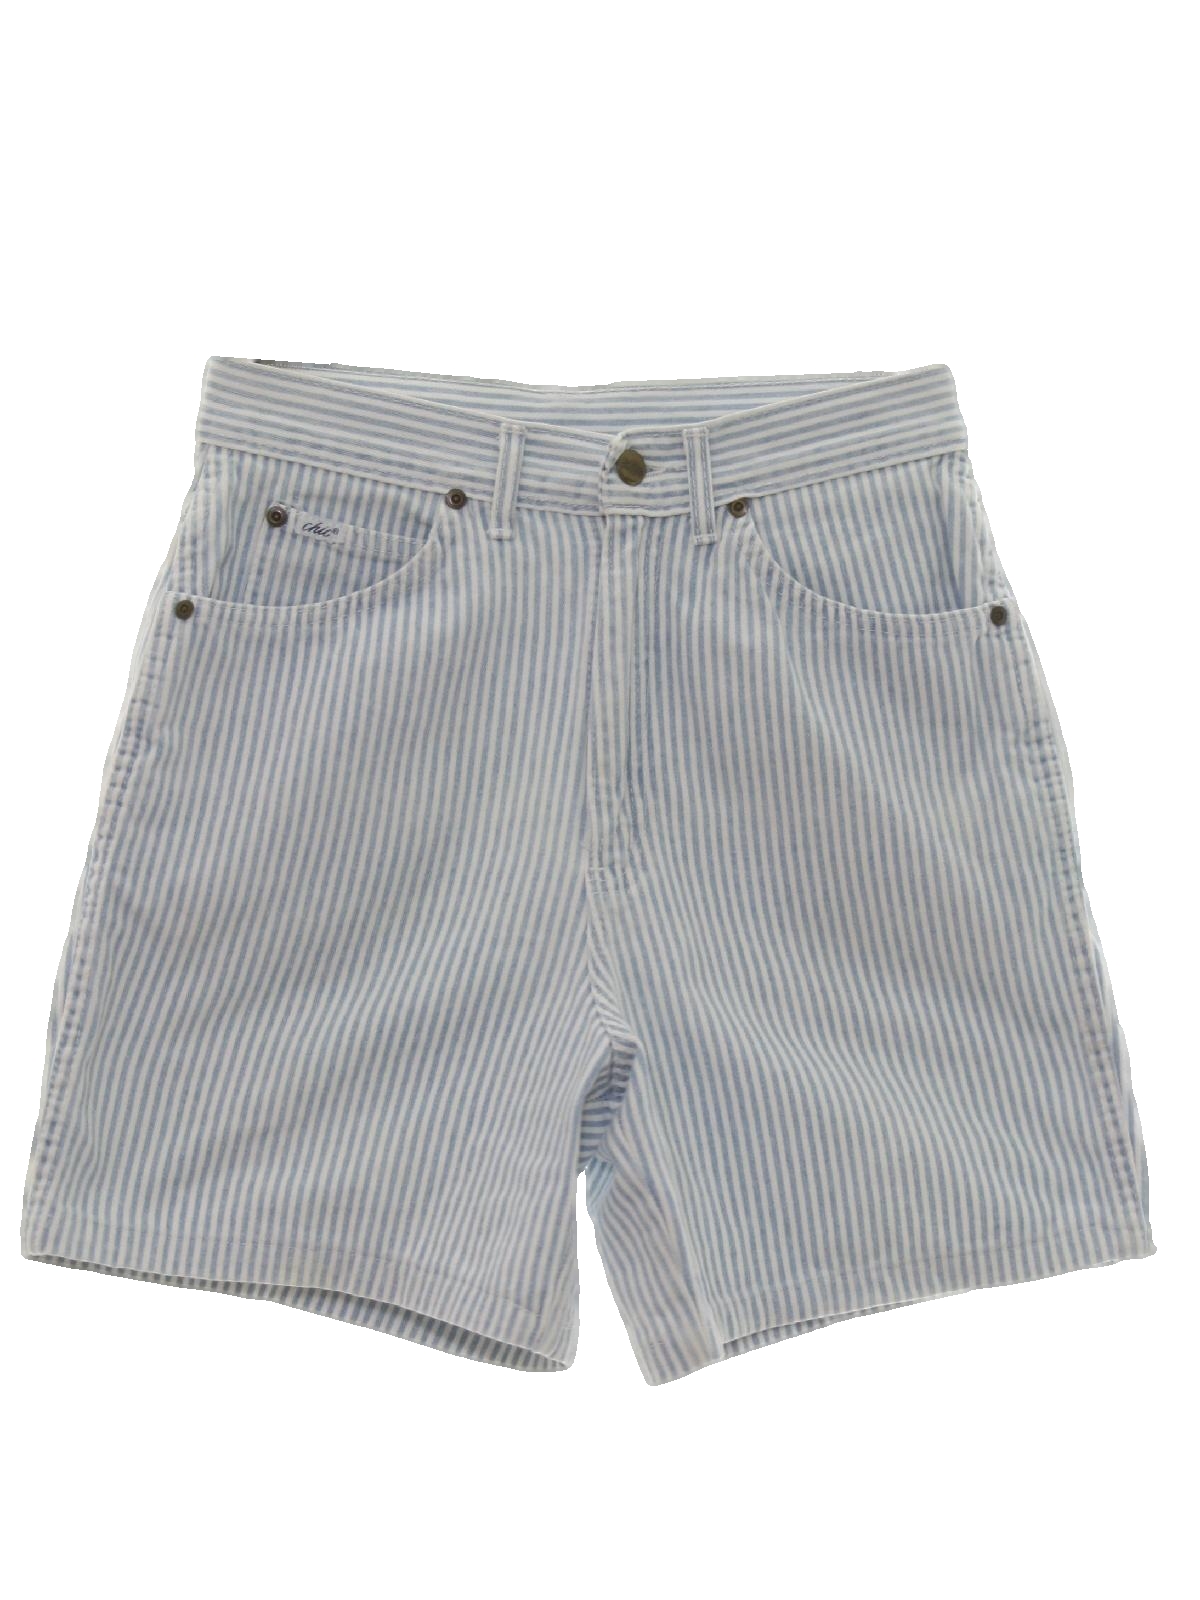 Retro 80s Shorts (Chic) : 80s -Chic- Womens light blue and white ...